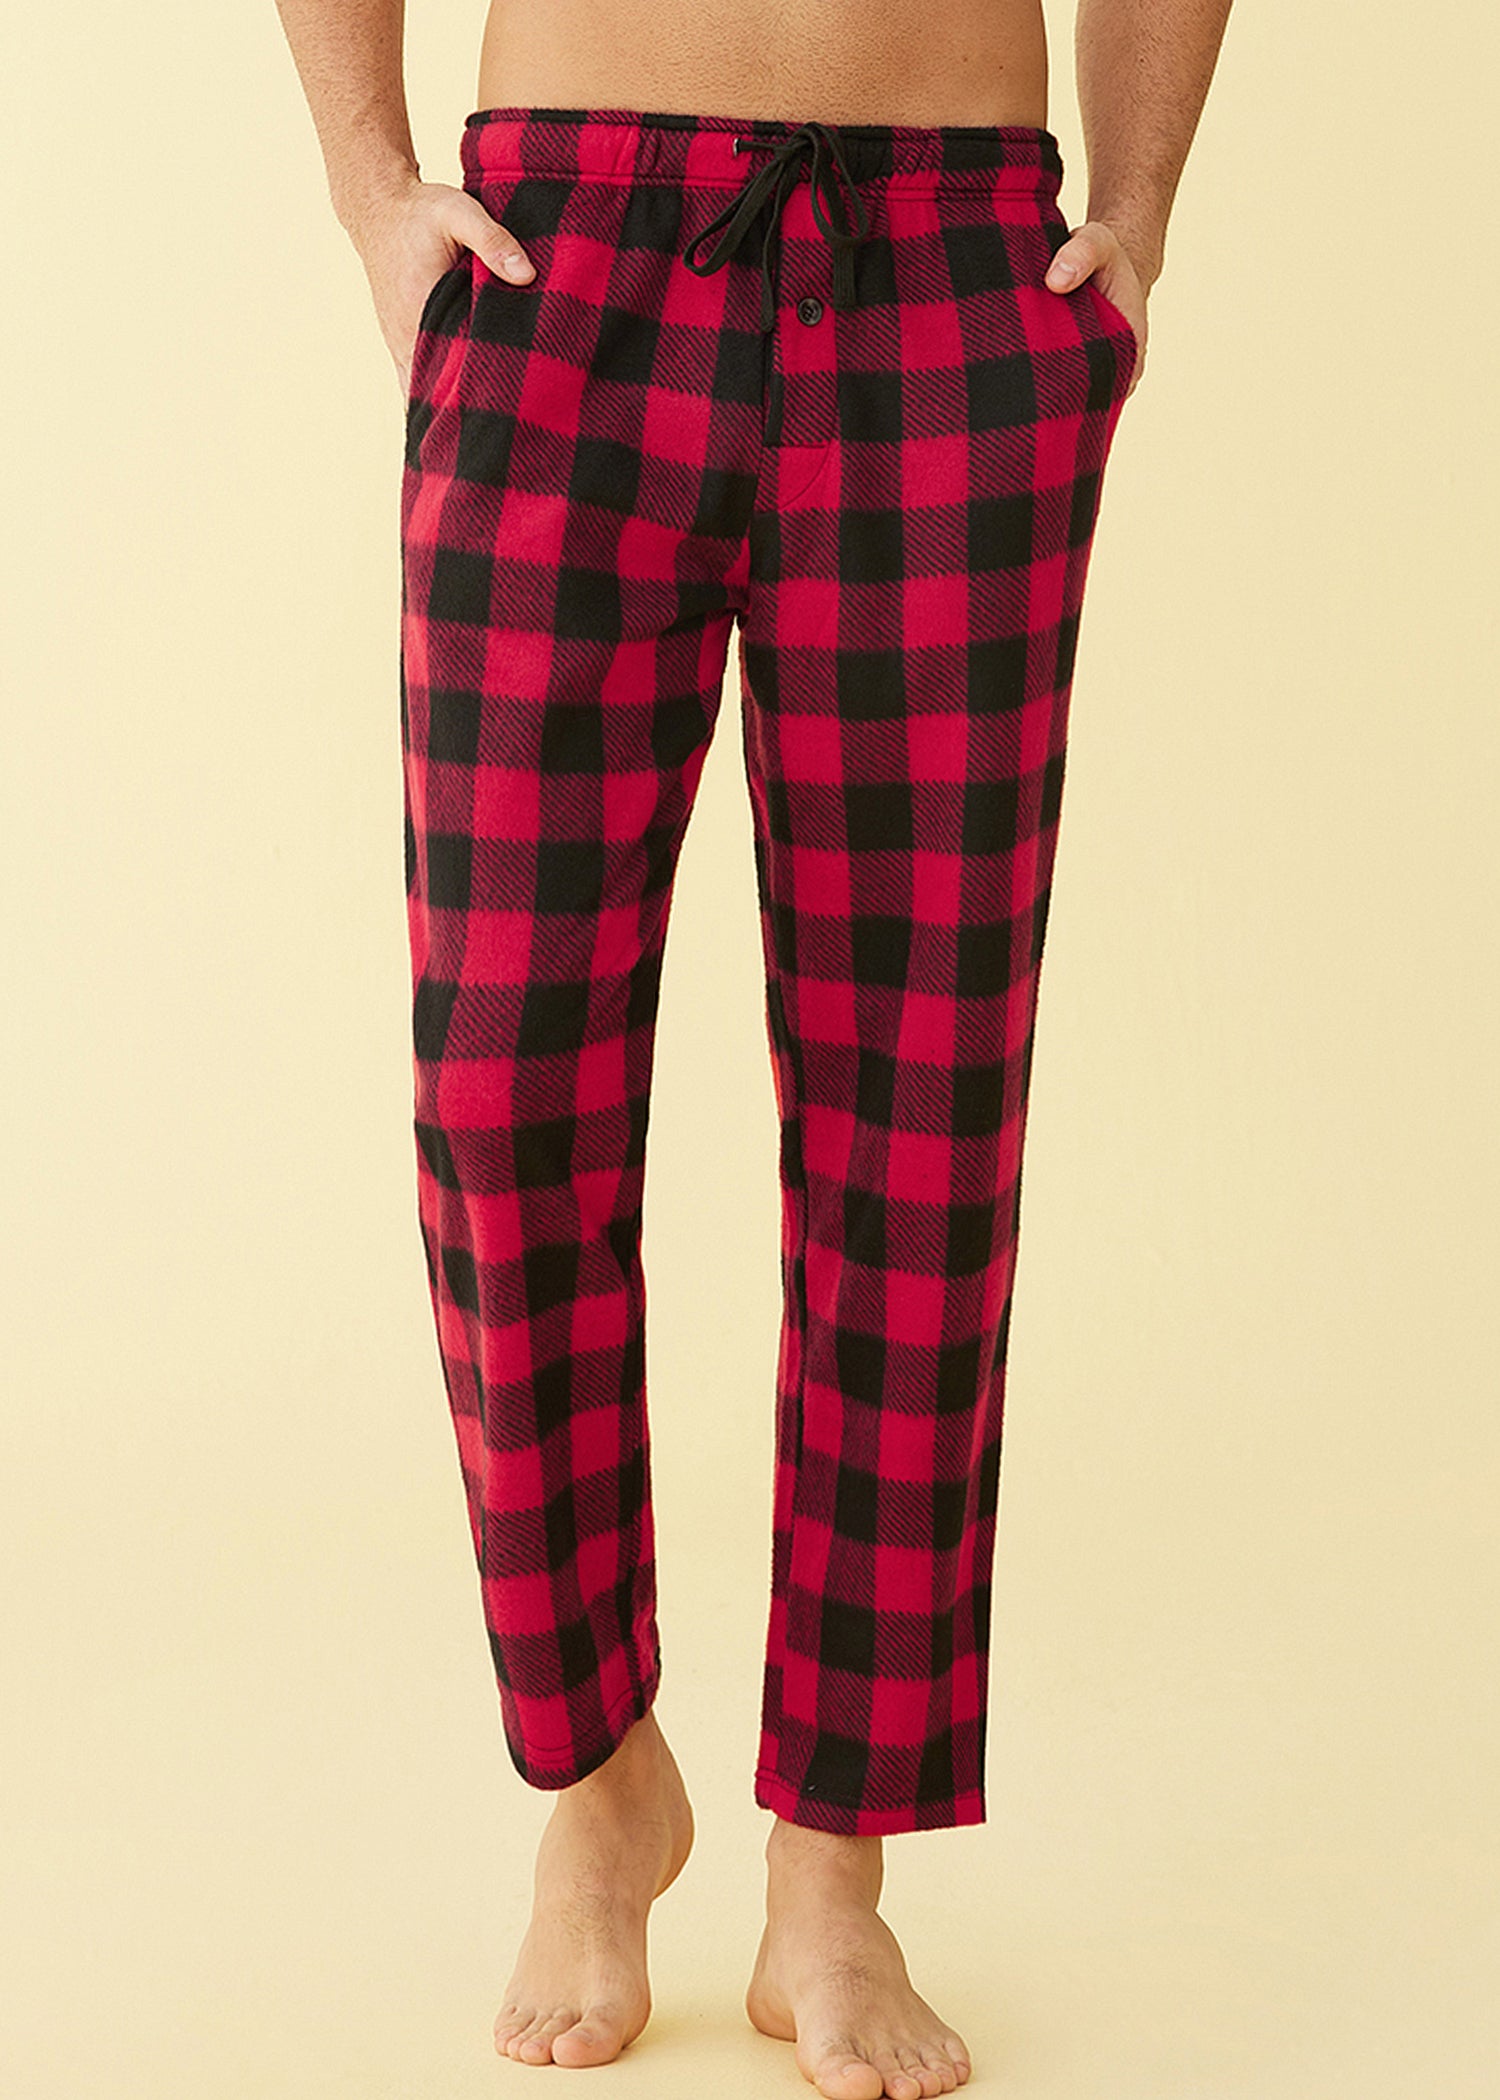 Microfleece Mens Plaid Pajama Pants with Pockets (Red Buffalo Plaid, Large)